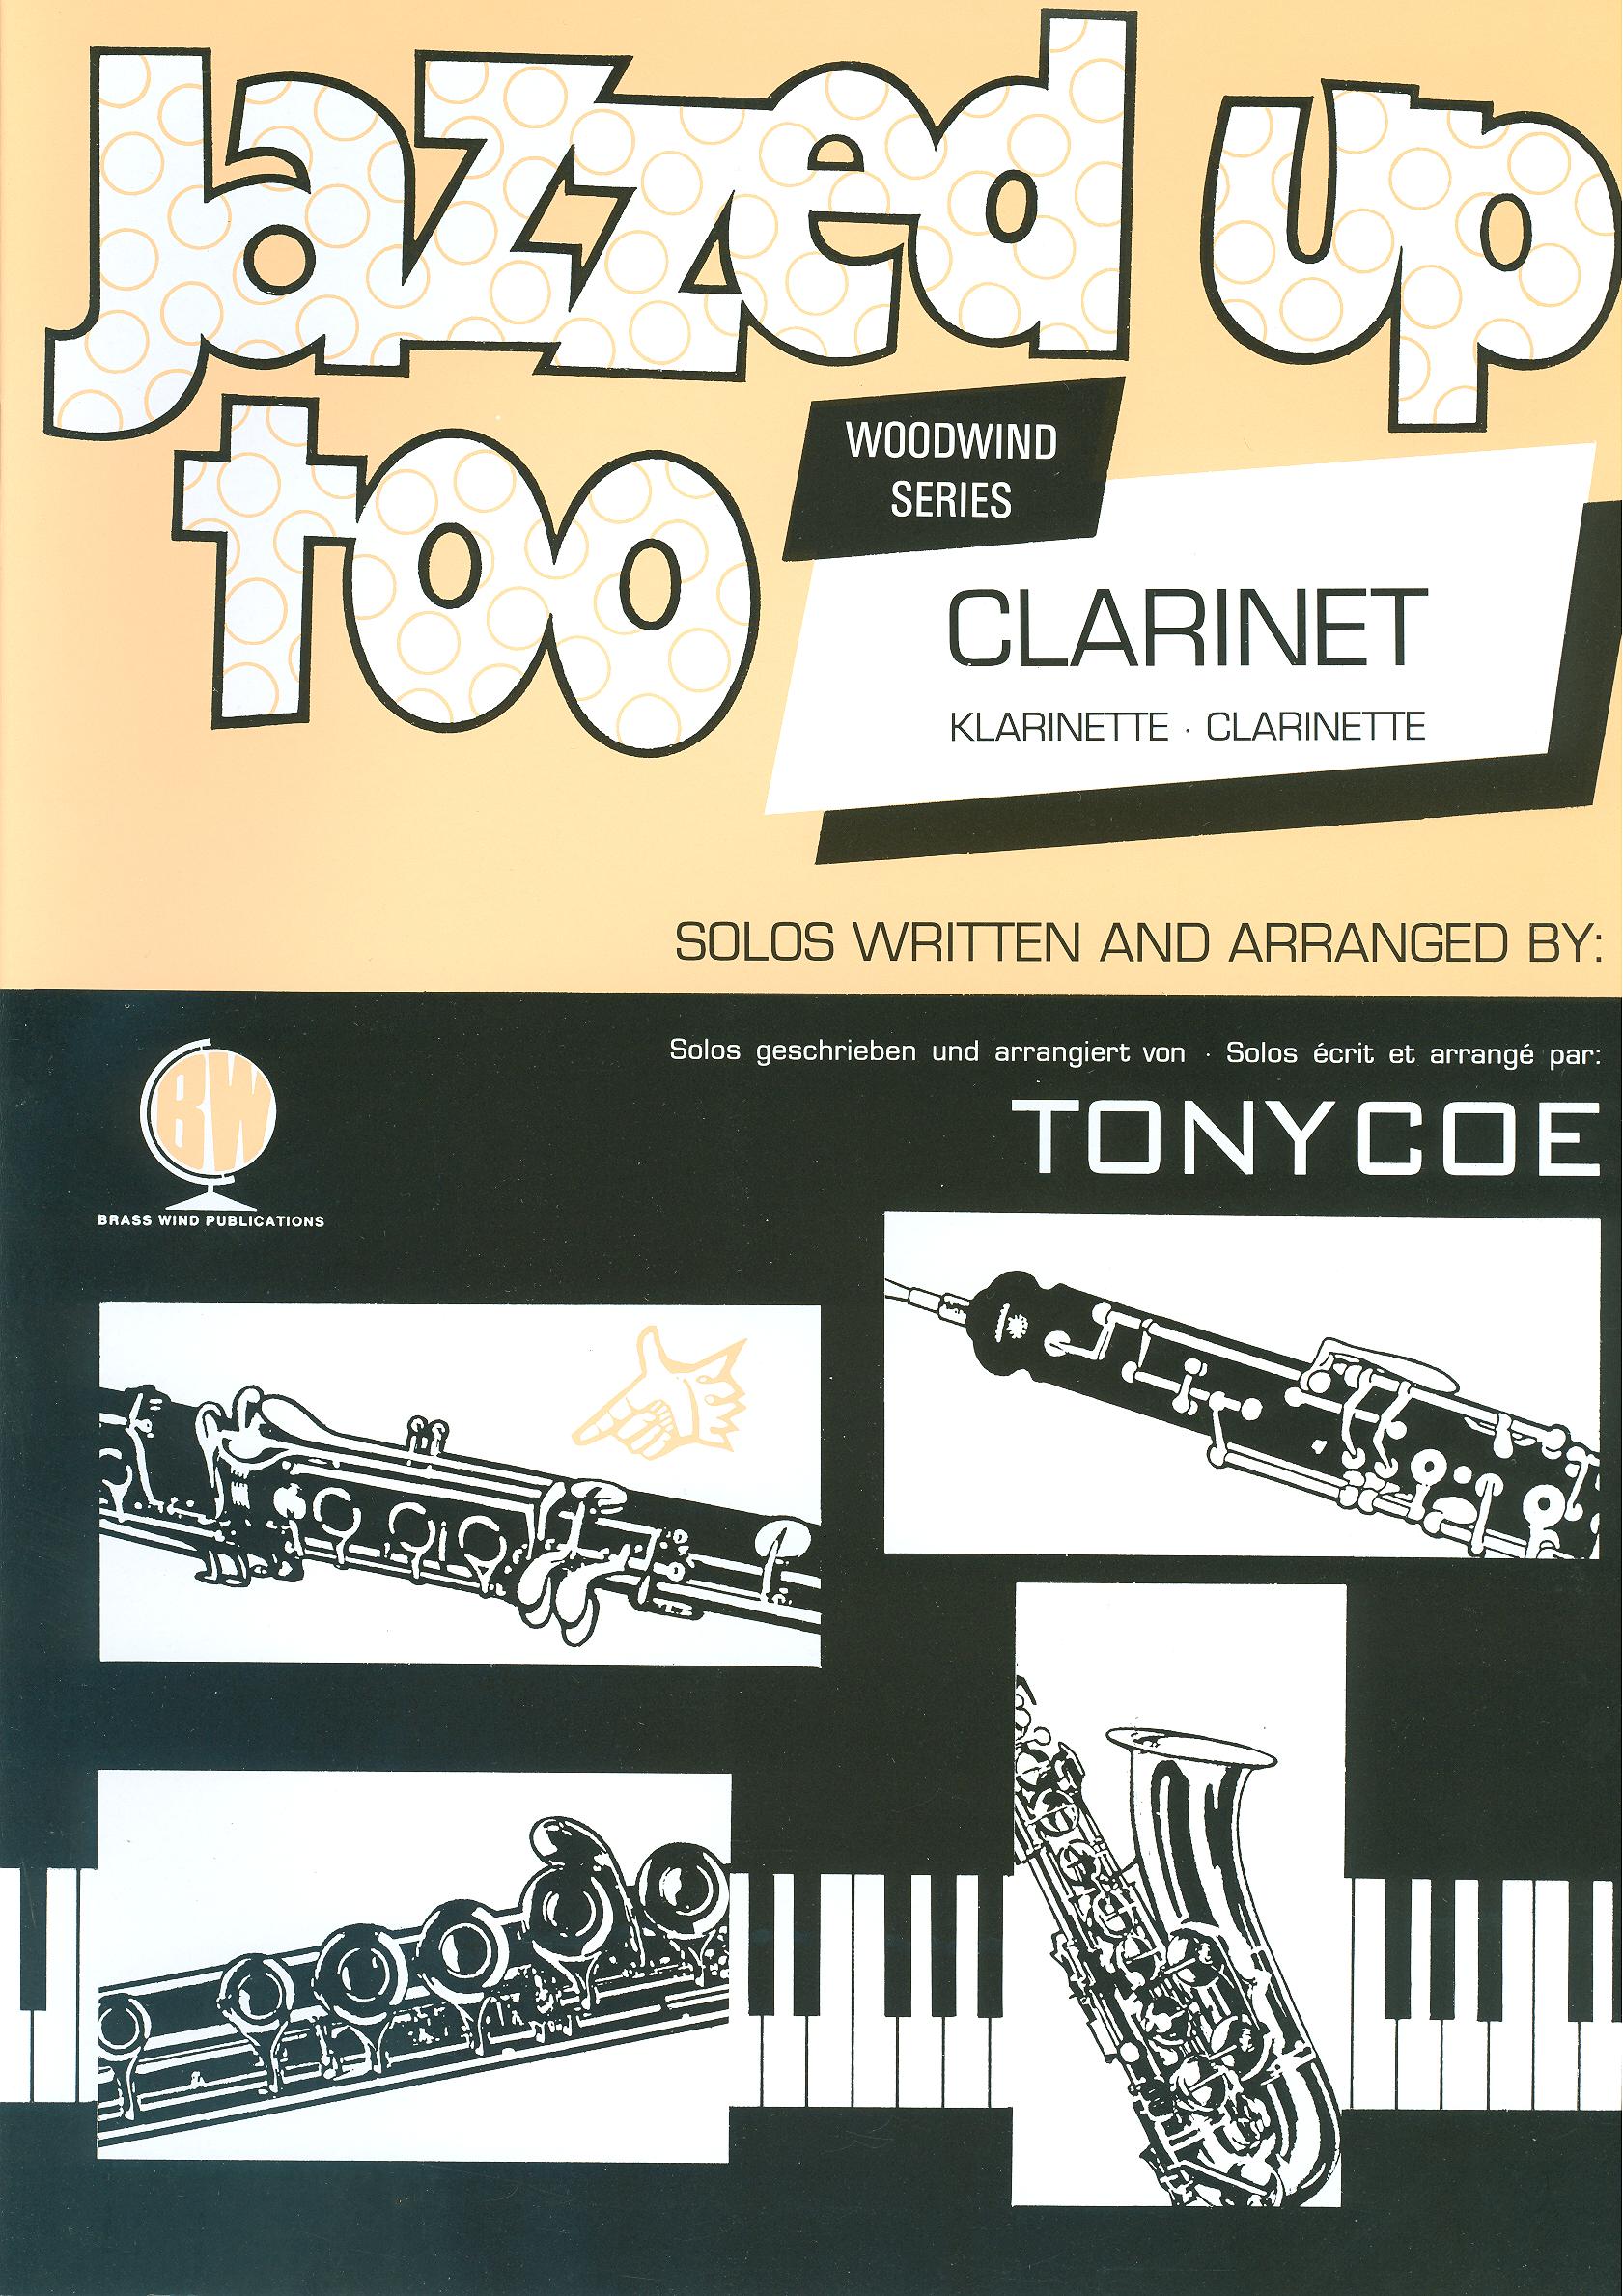 Coe: Jazzed Up Too For Clarinet: Clarinet: Instrumental Album